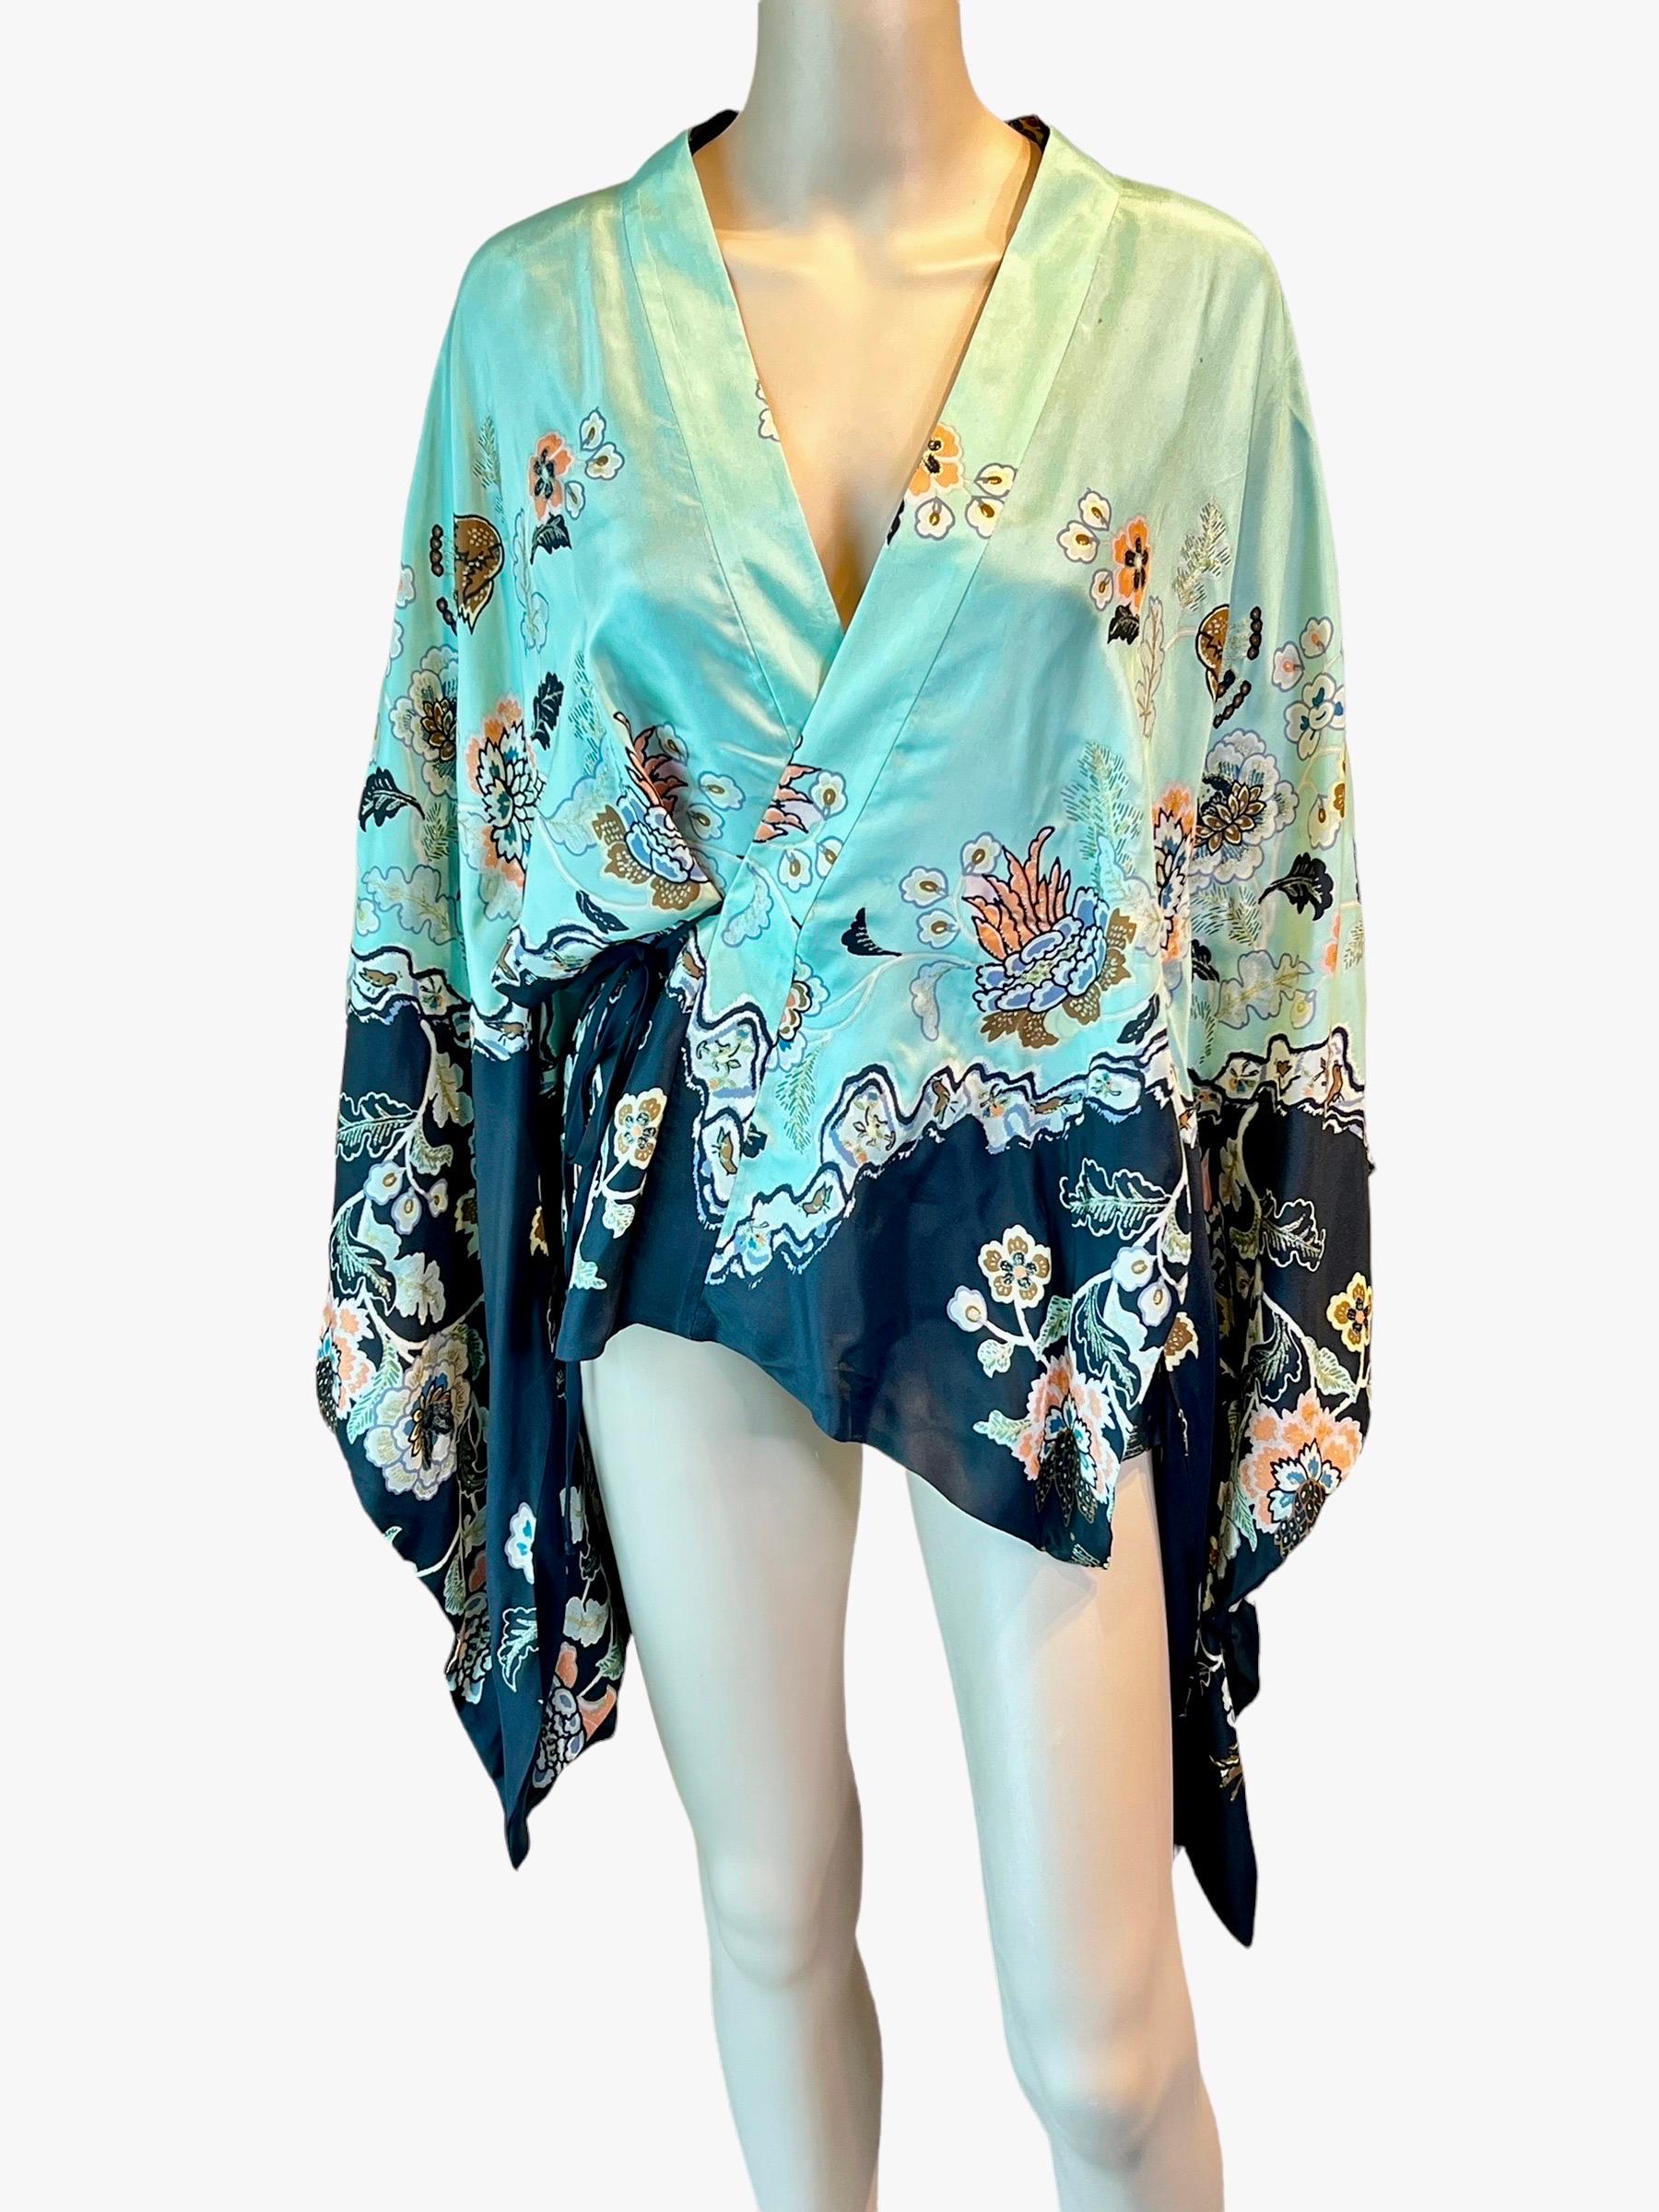 Roberto Cavalli S/S 2003 Runway Chinoiserie Print Silk Kimono Top For Sale 1